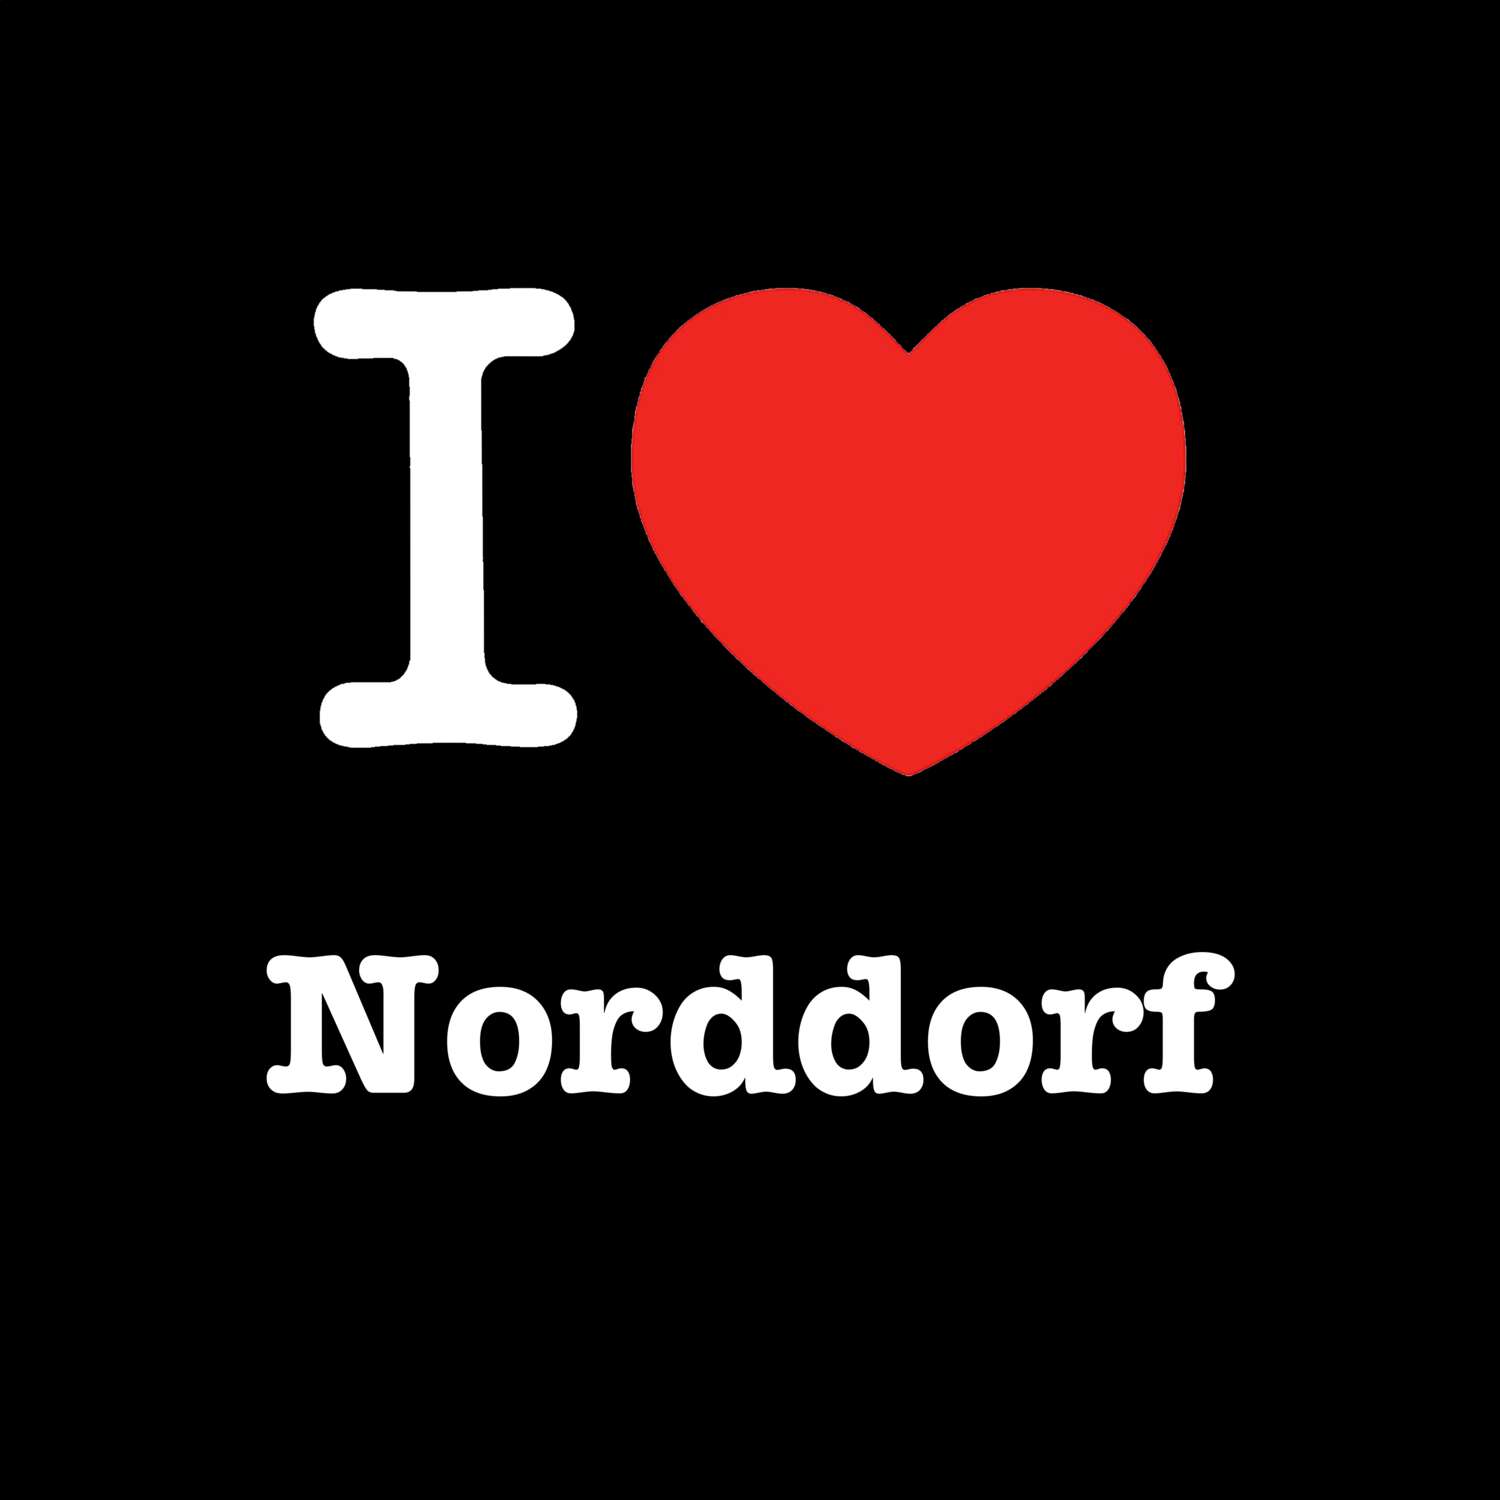 Norddorf T-Shirt »I love«